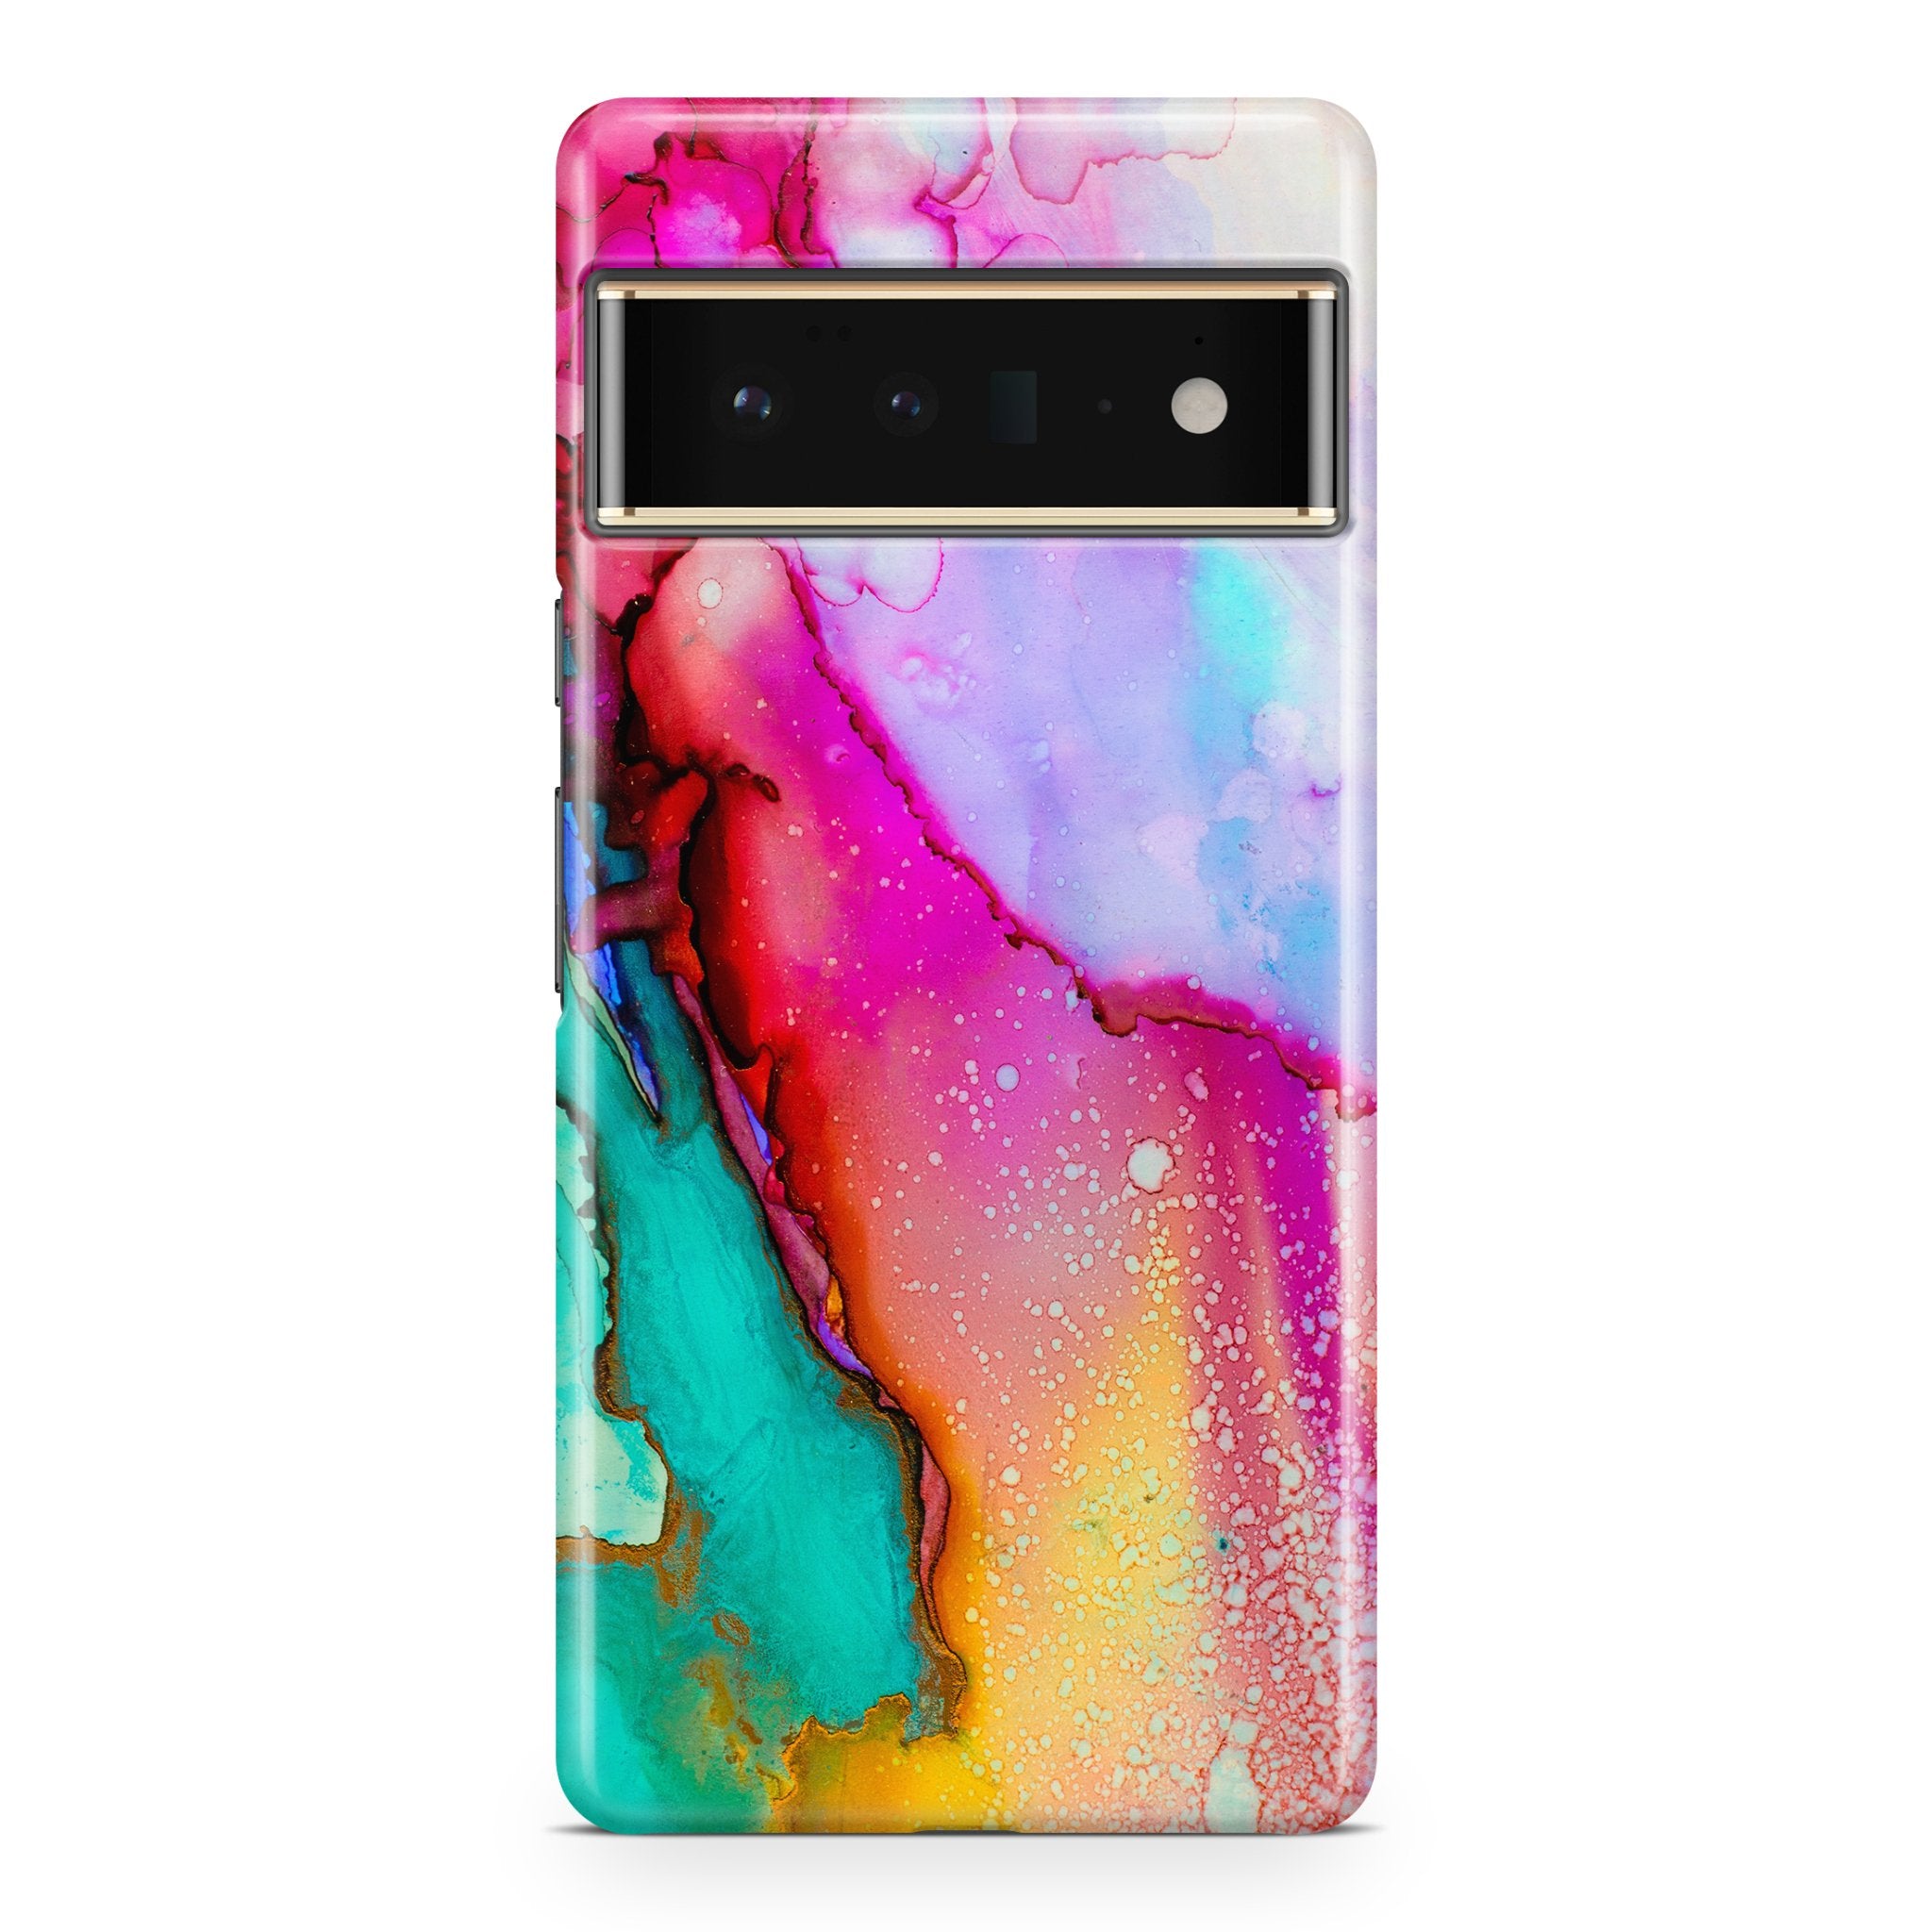 Rainbow Splash - Google phone case designs by CaseSwagger